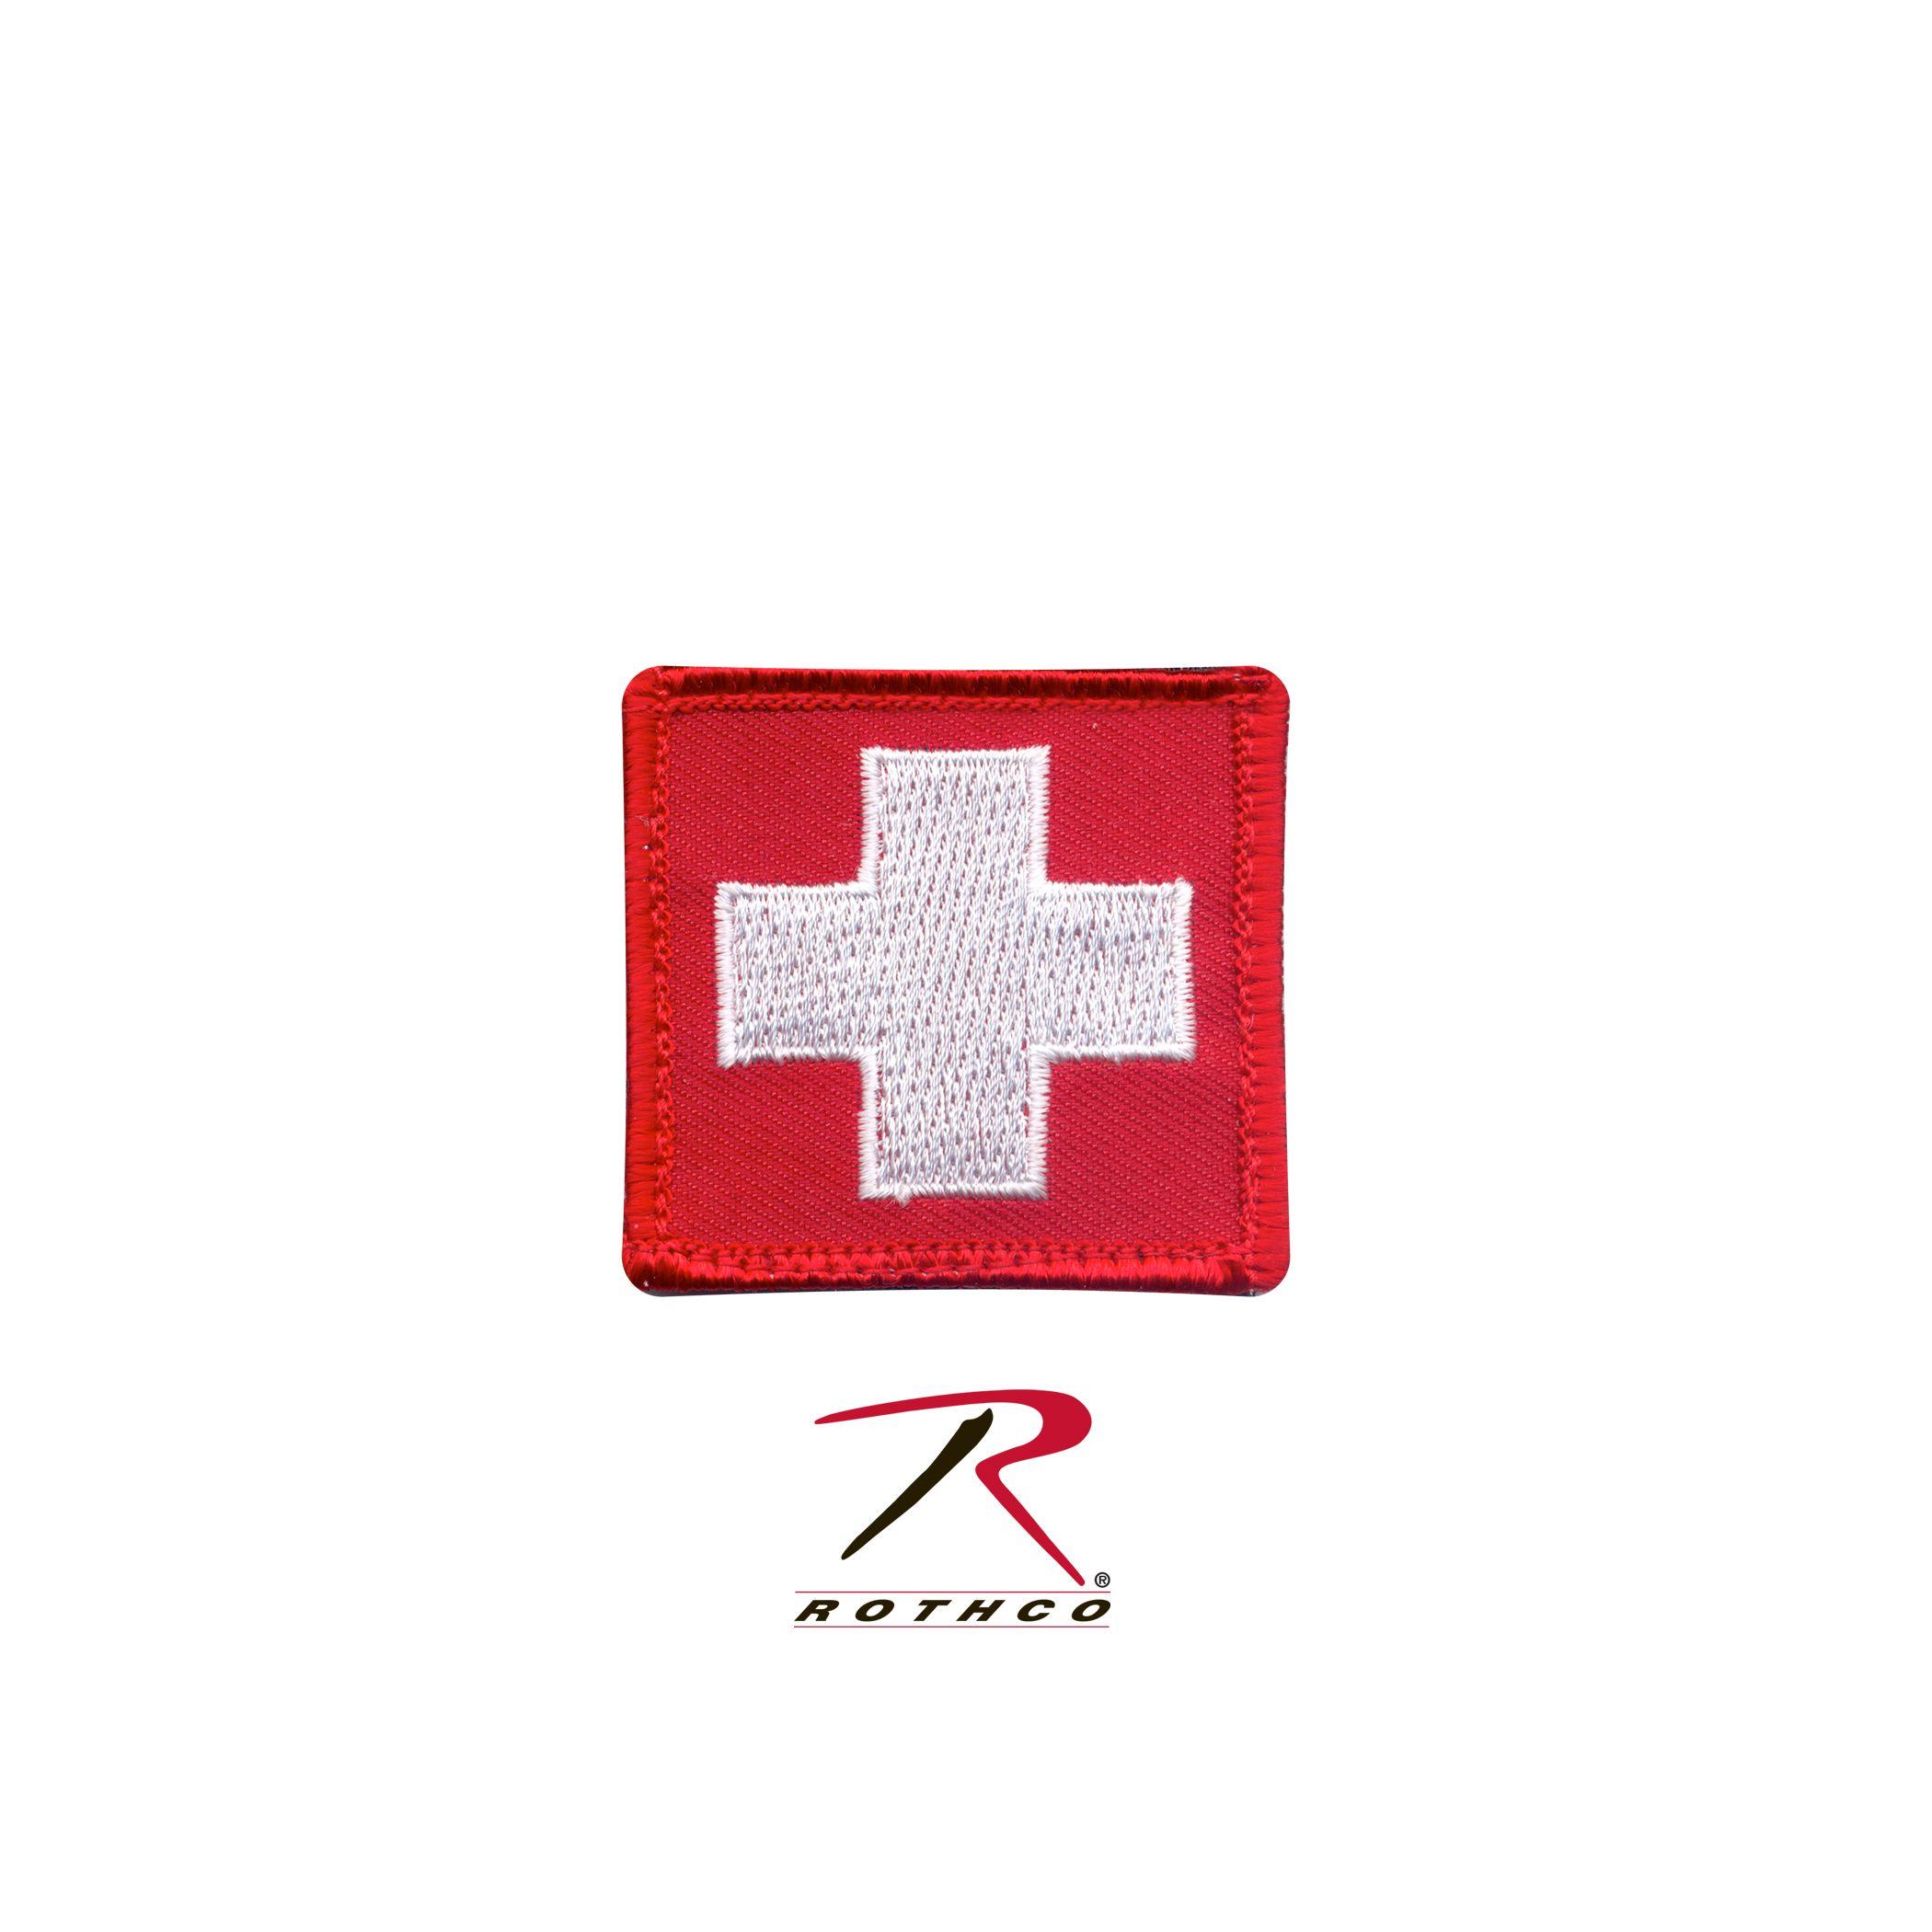 White Cross Company Logo - Red square white cross Logos